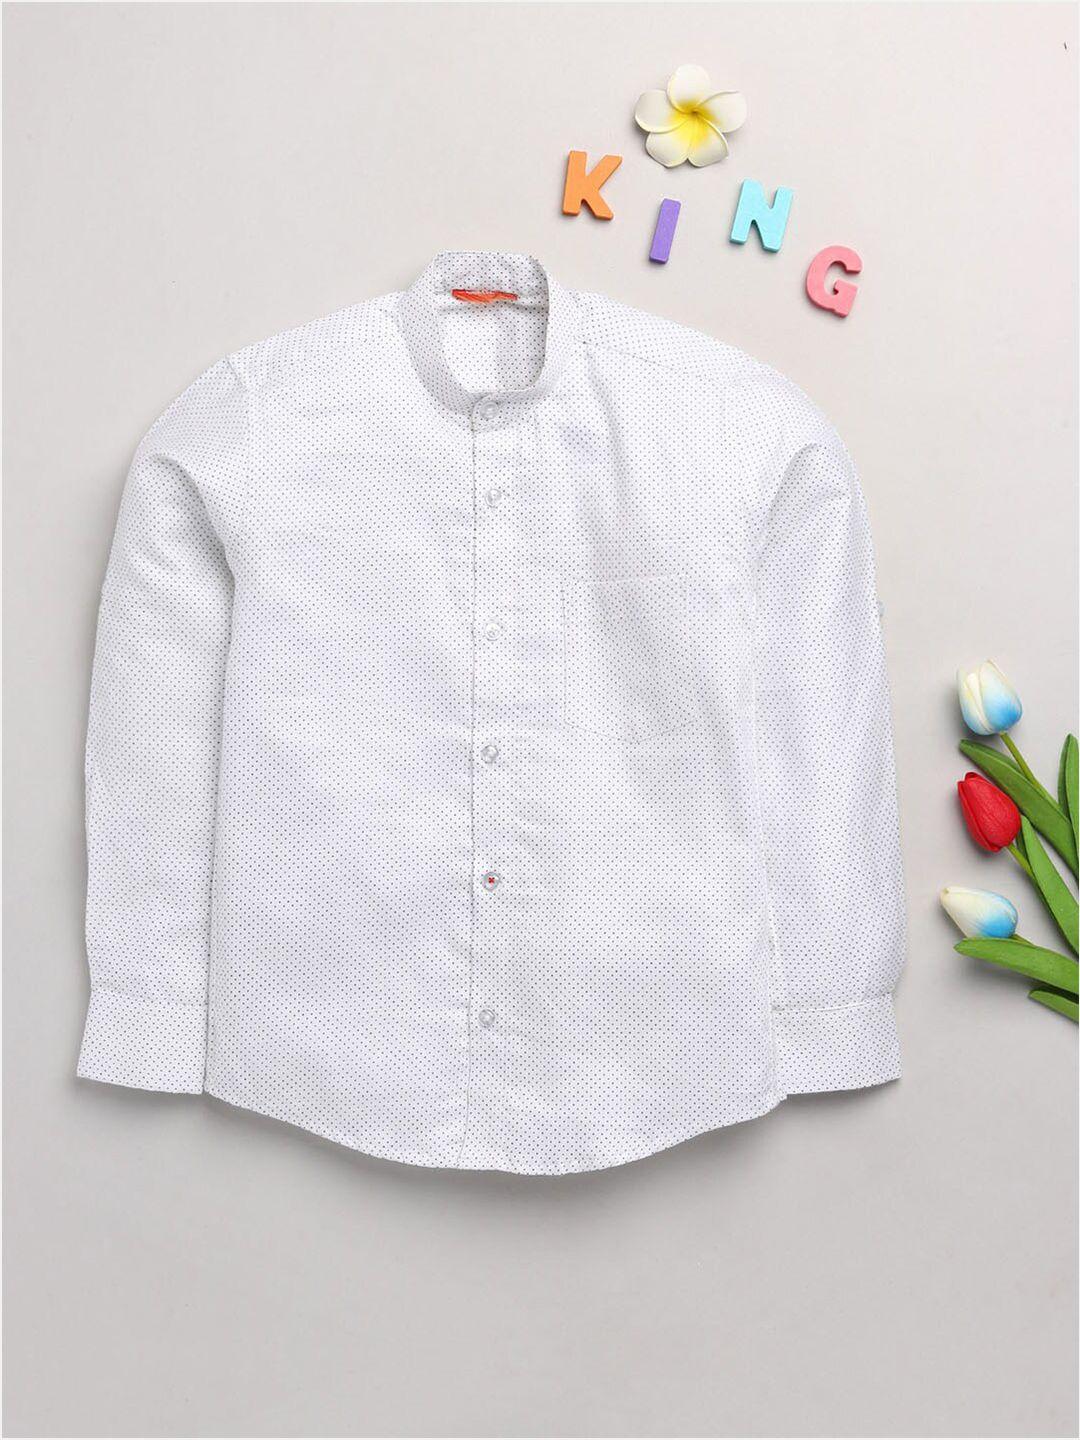 jbn creation kids  boys white classic casual polka dot printed full sleeve shirt